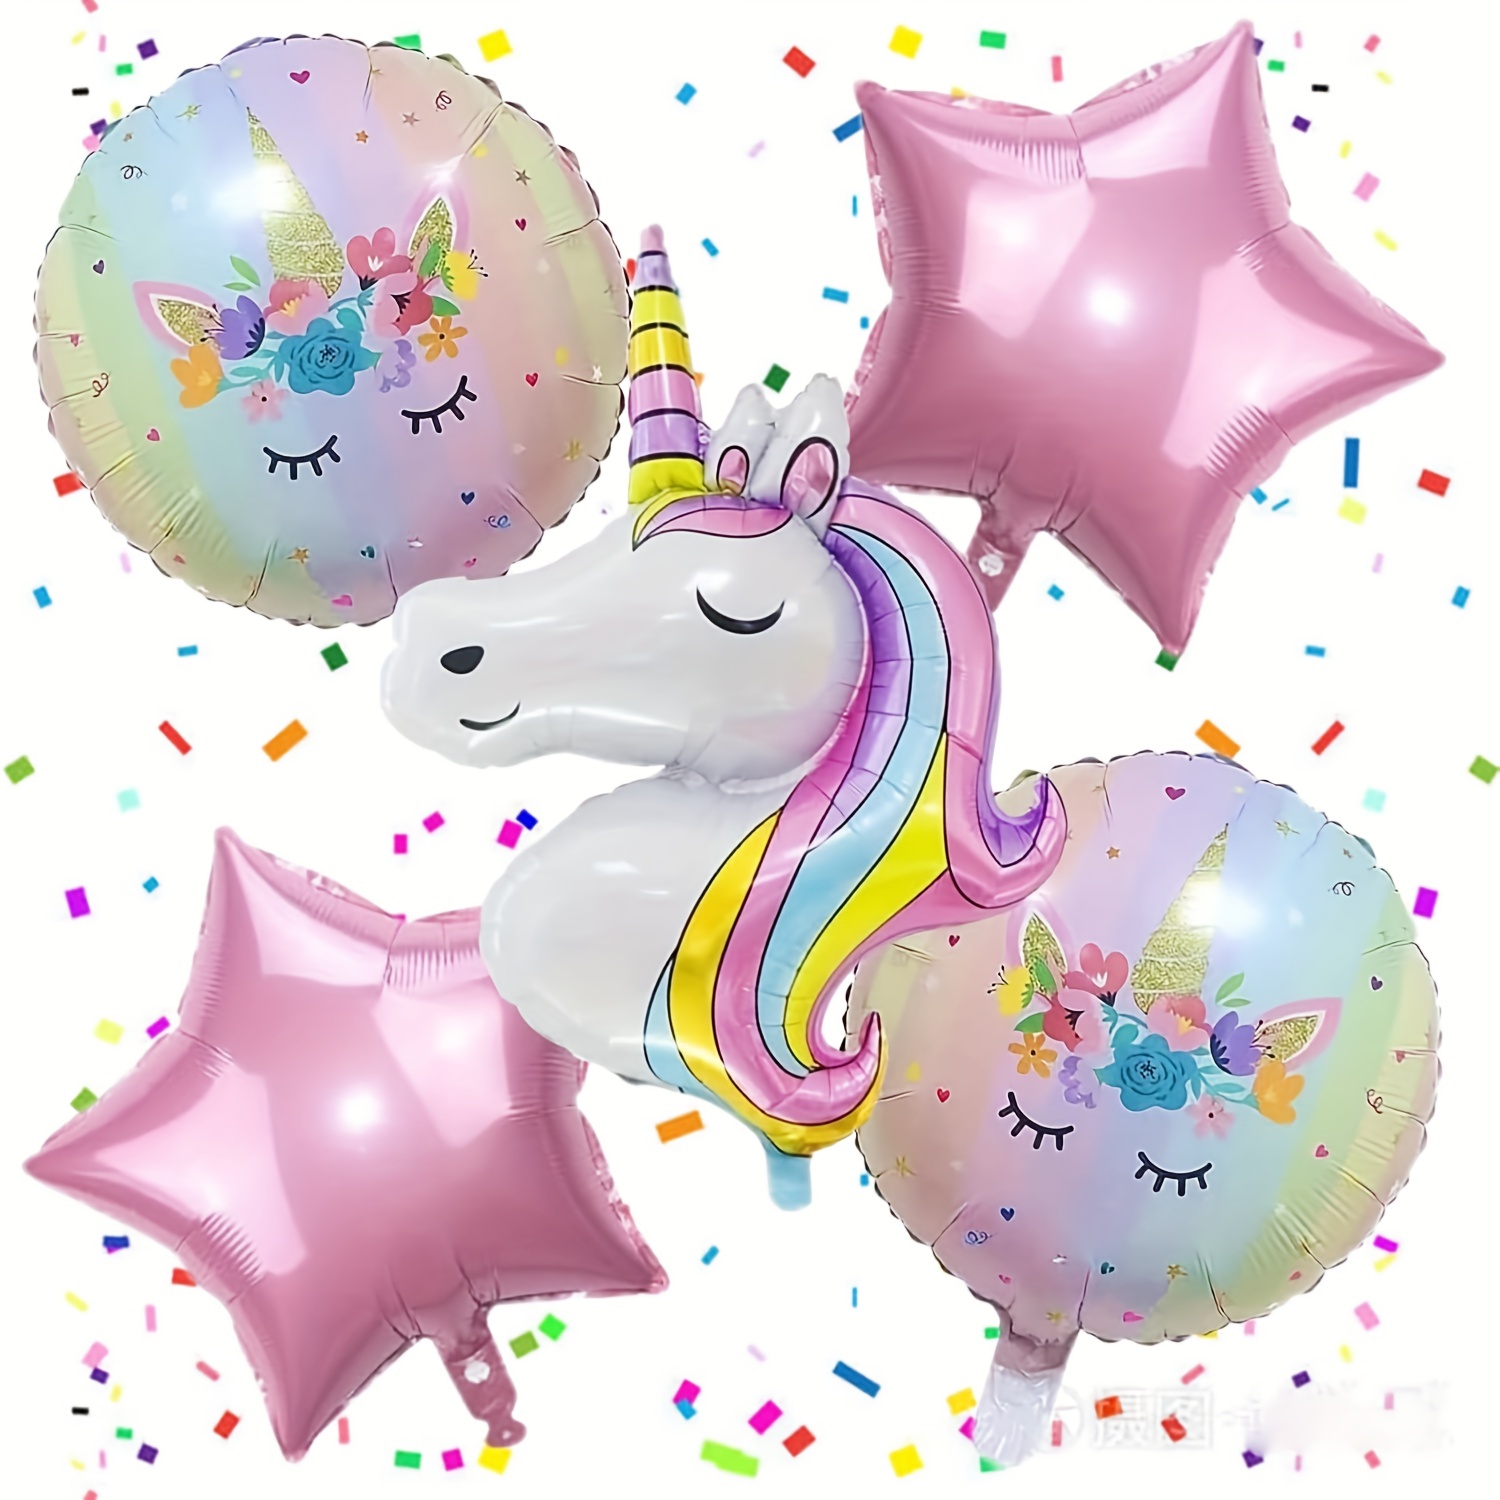 Globo de unicornio arcoíris con número, decoración de fiesta de